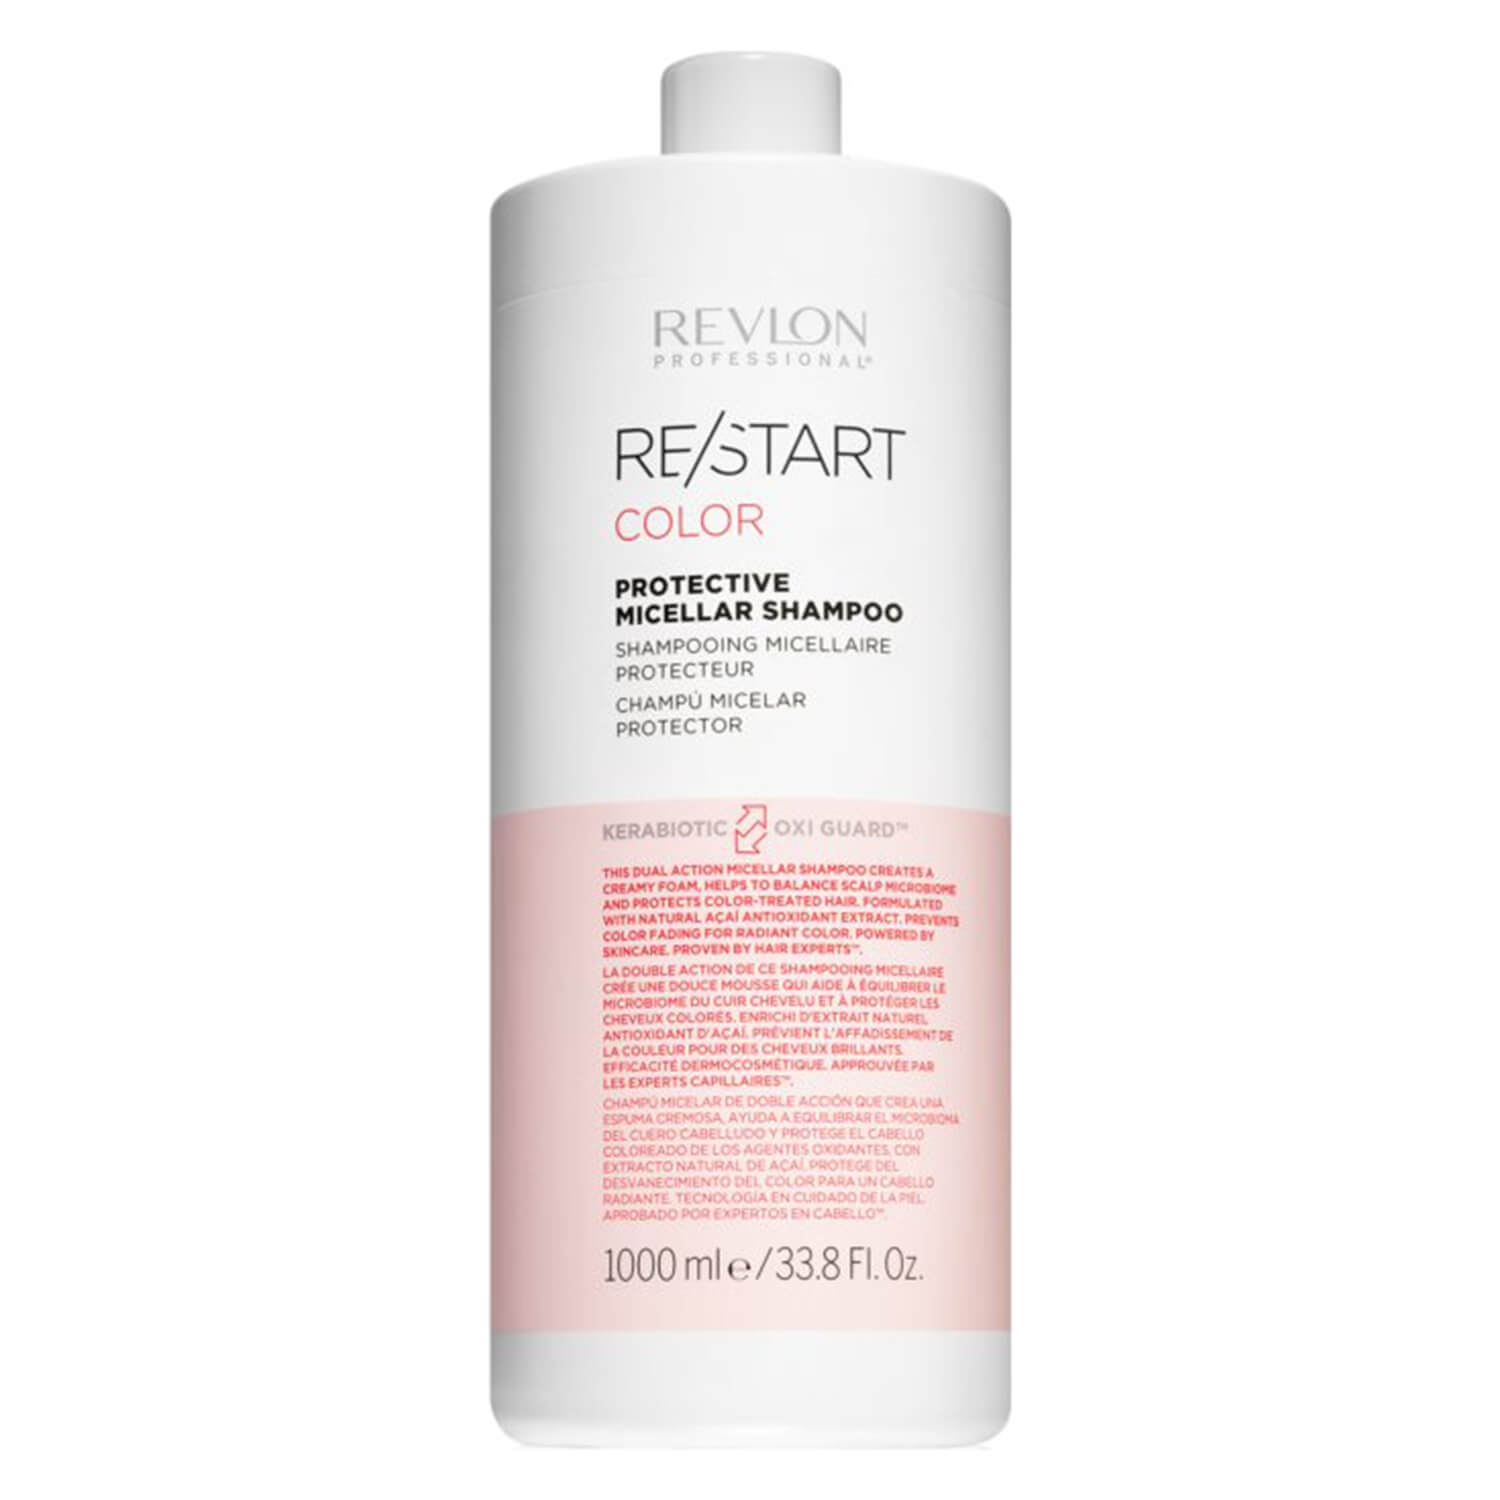 Produktbild von RE/START COLOR - Protective Micellar Shampoo